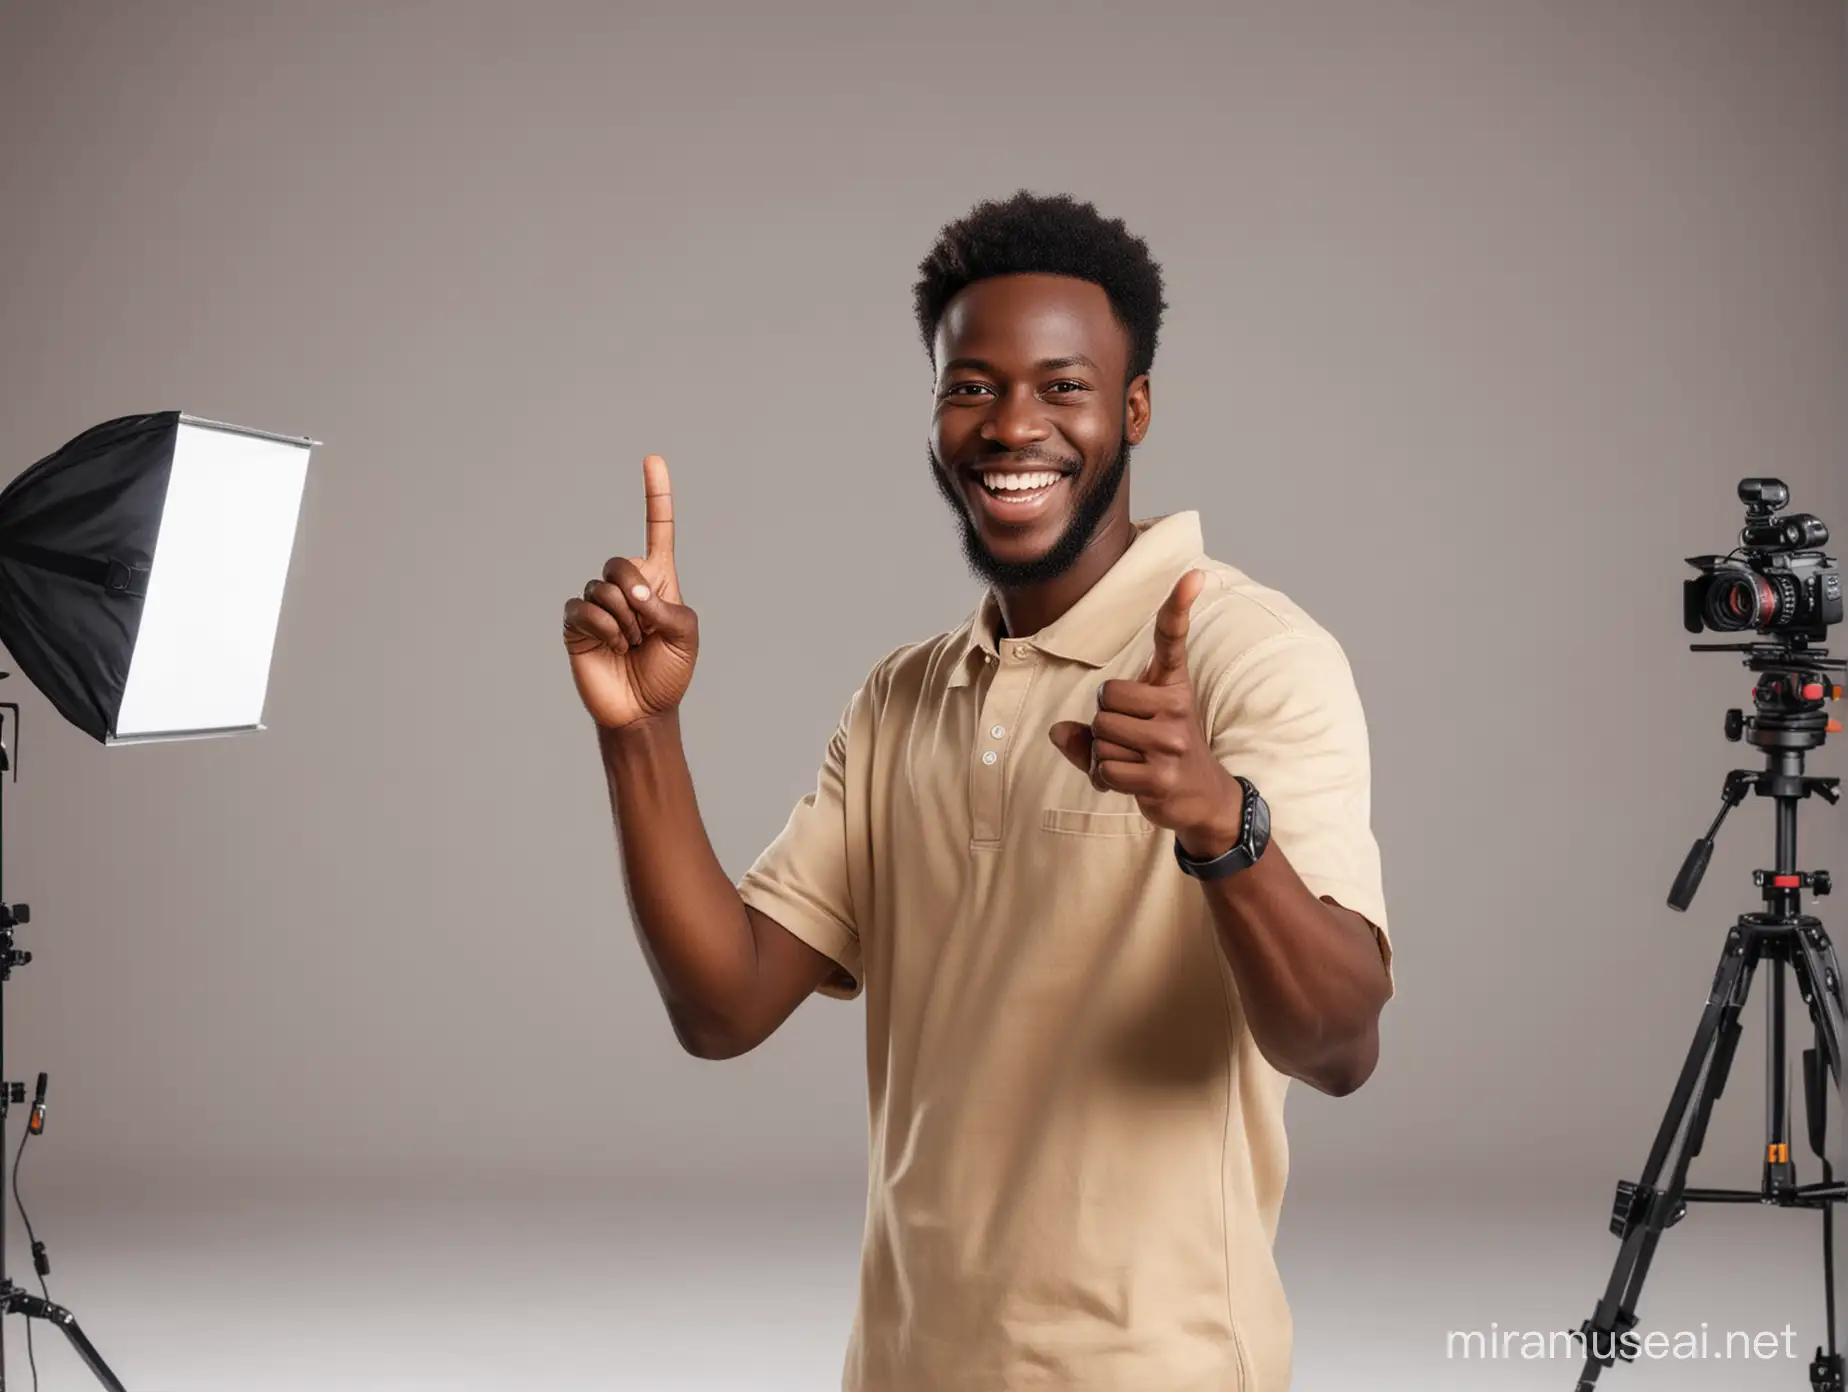 Joyful African Man Giving OK Sign on Video Shooting Stage